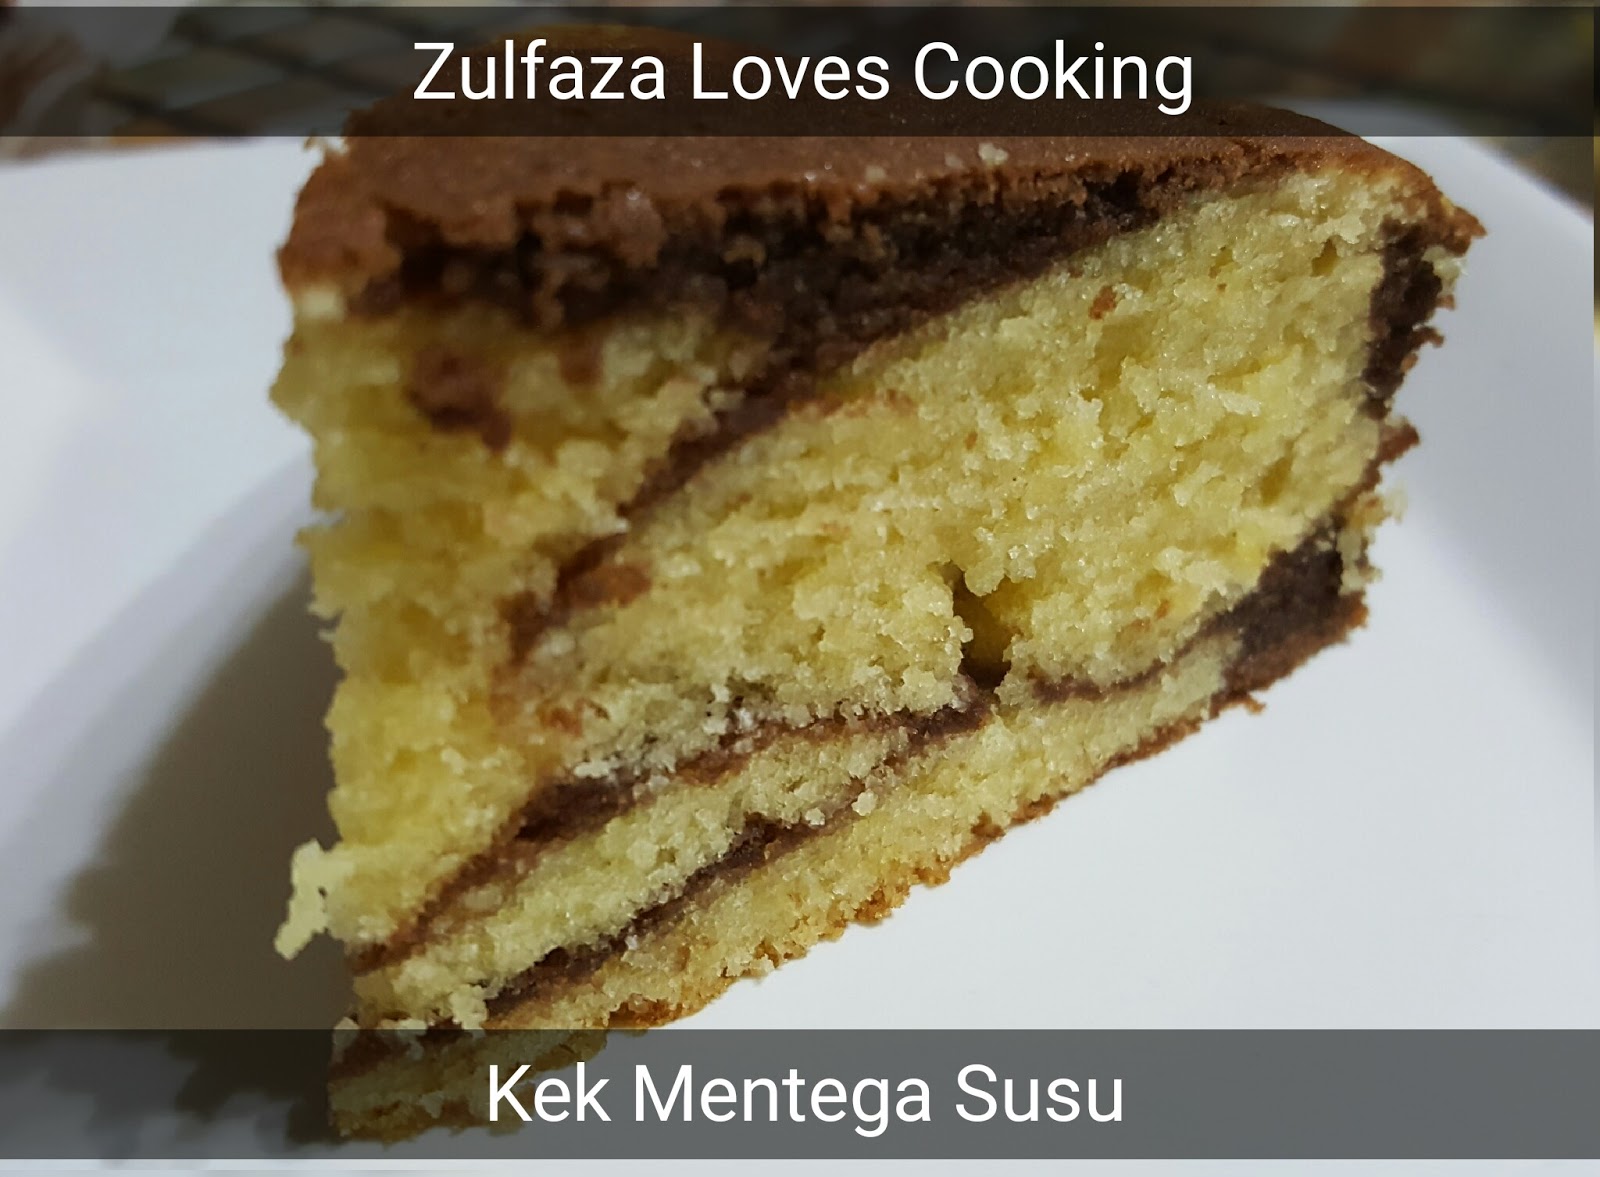 ZULFAZA LOVES COOKING: Kek mentega susu